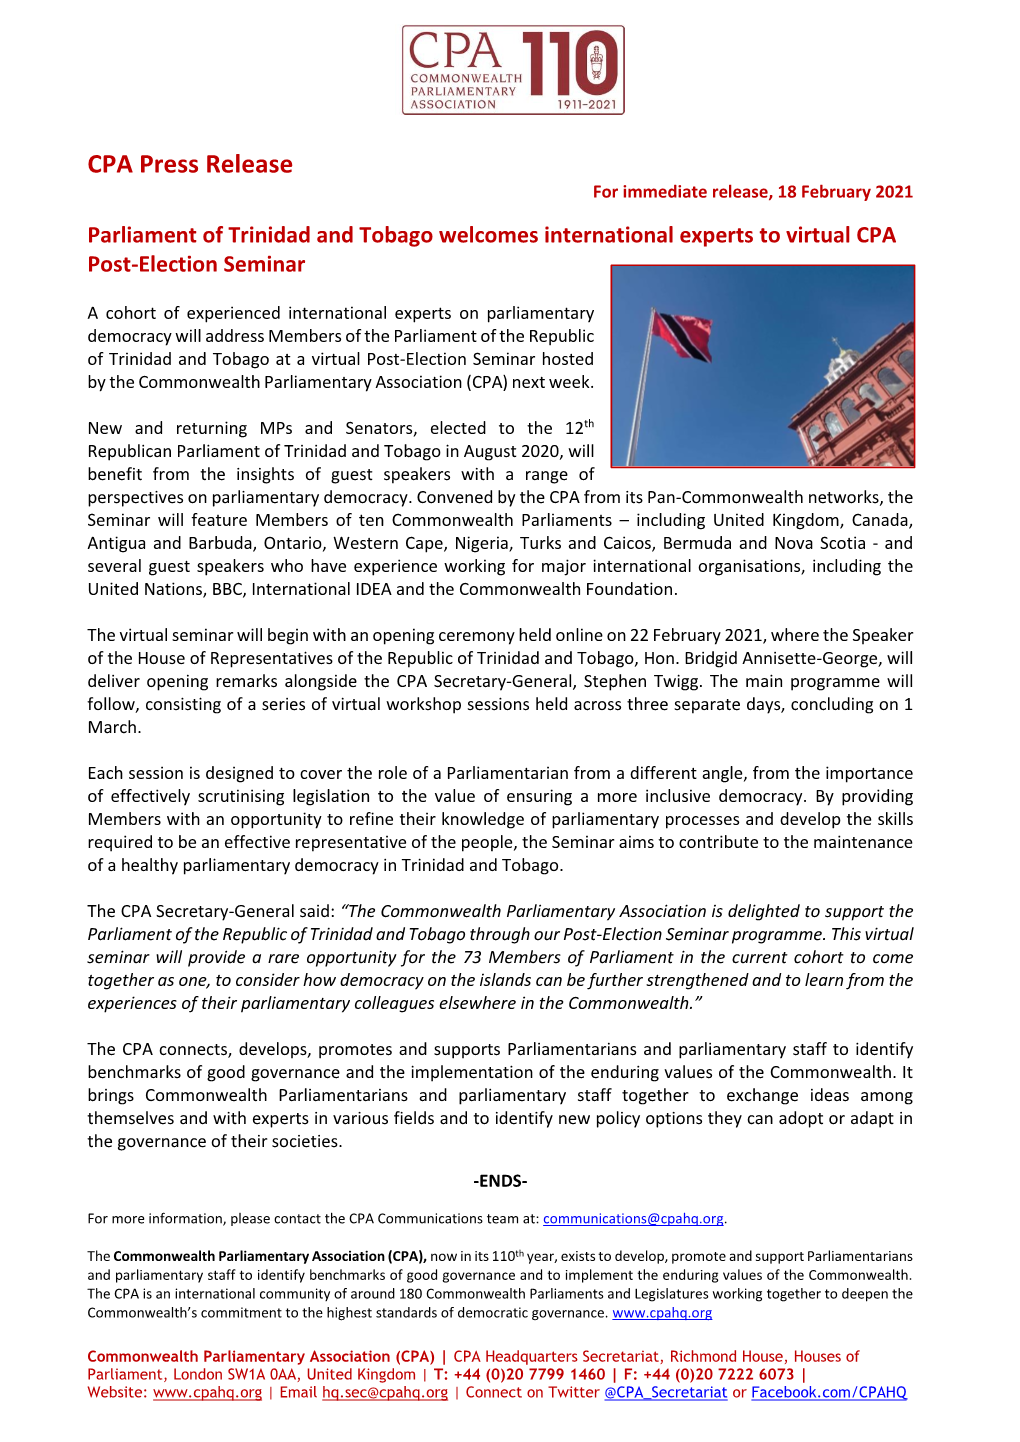 CPA Press Release for Immediate Release, 18 February 2021